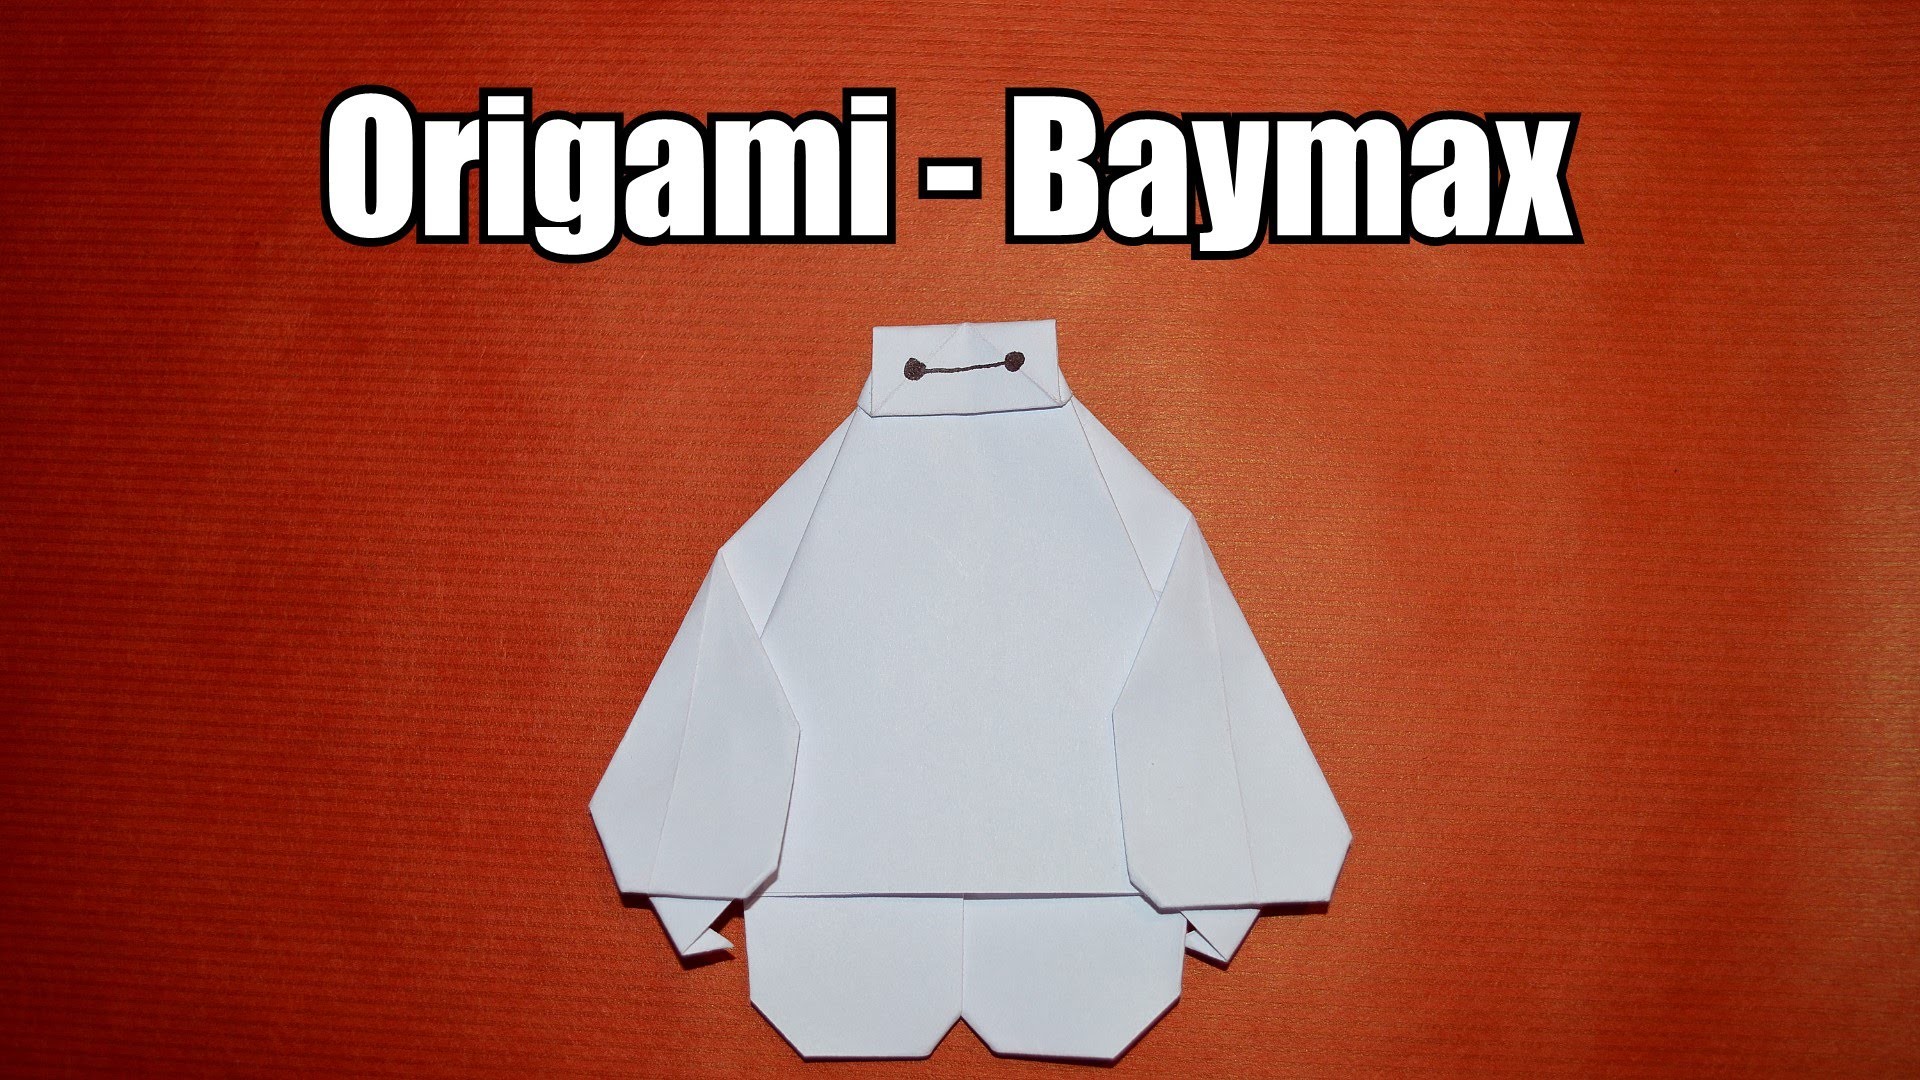 Origami - Baymax